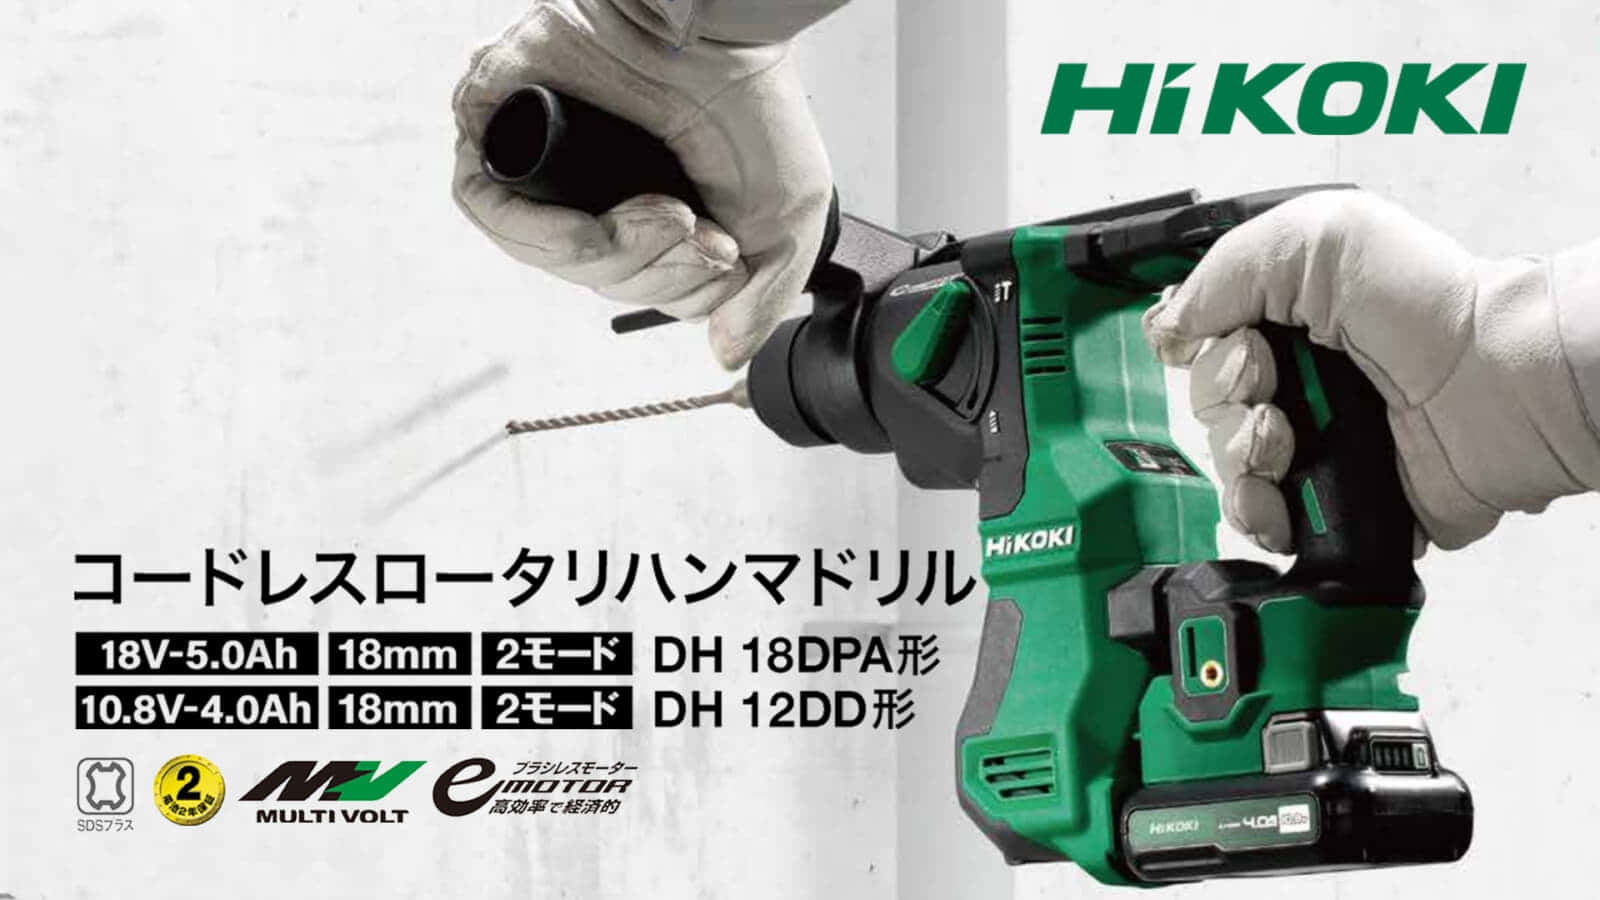 HiKOKI DH18DPA/DH12DD ミドルクラスのコンパクトハンマドリルを発売